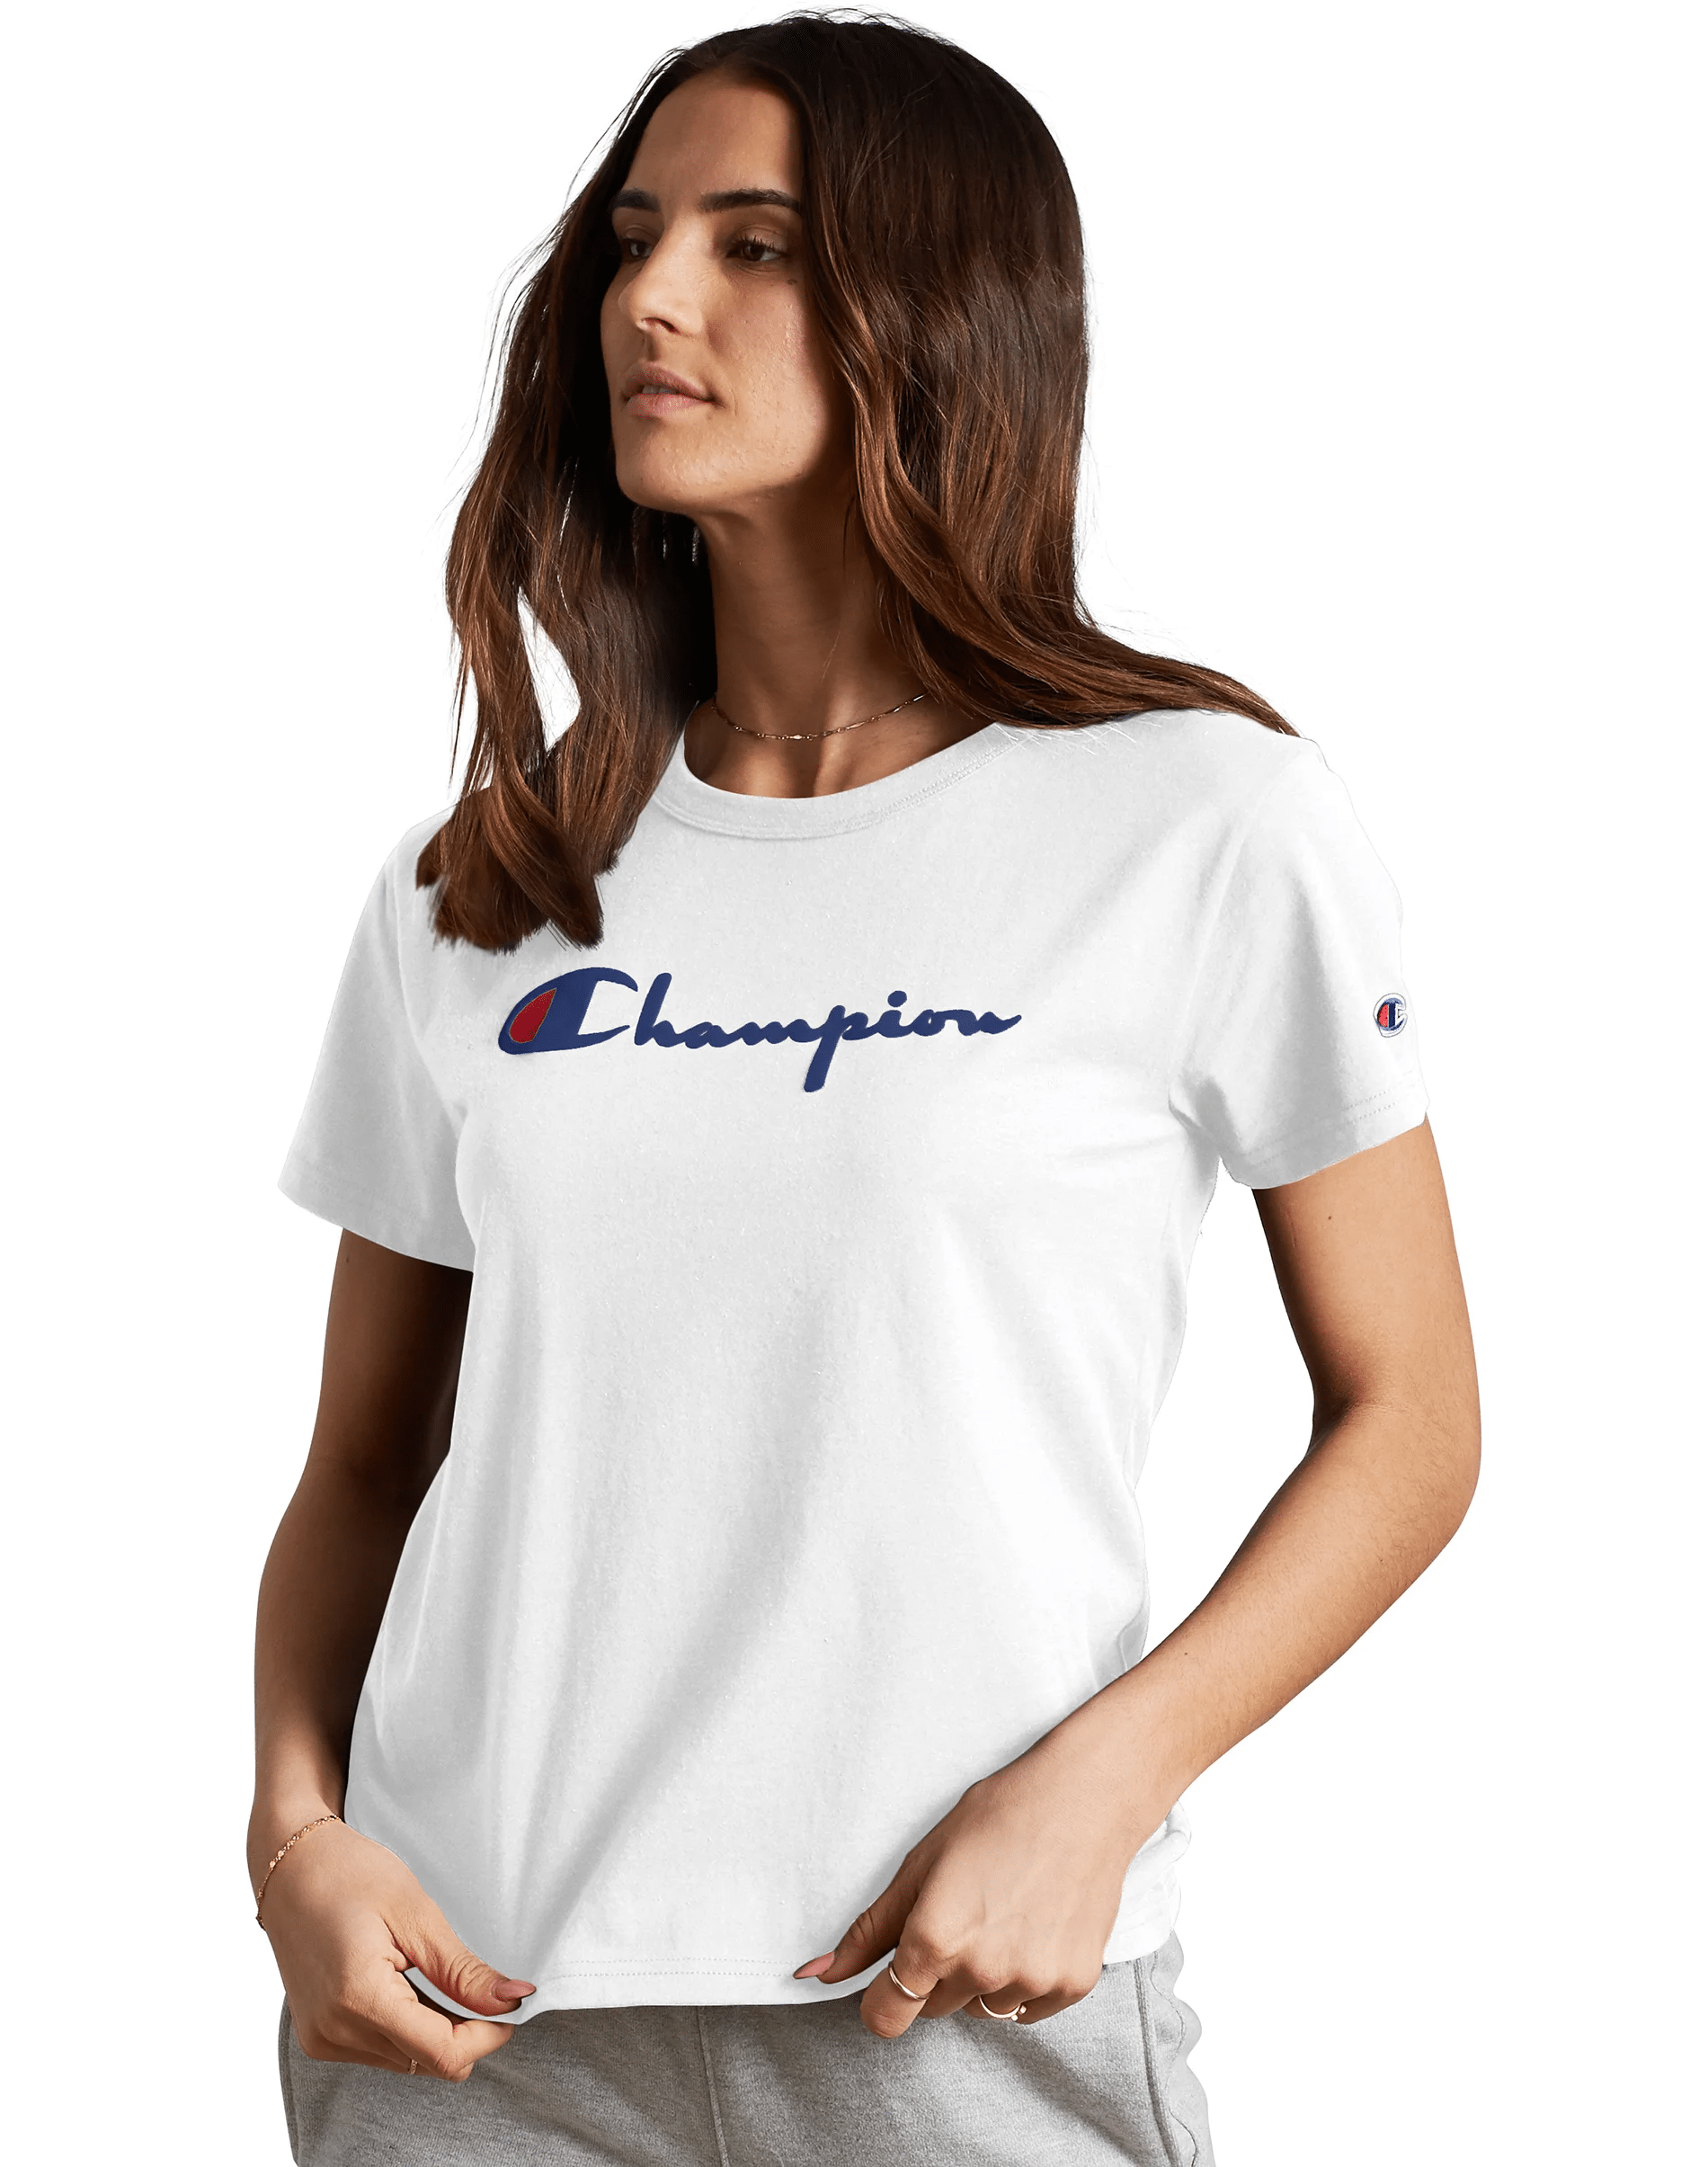 Champion womens Tee Shirt, Classic Crewneck Tee Shirt, Best Cotton